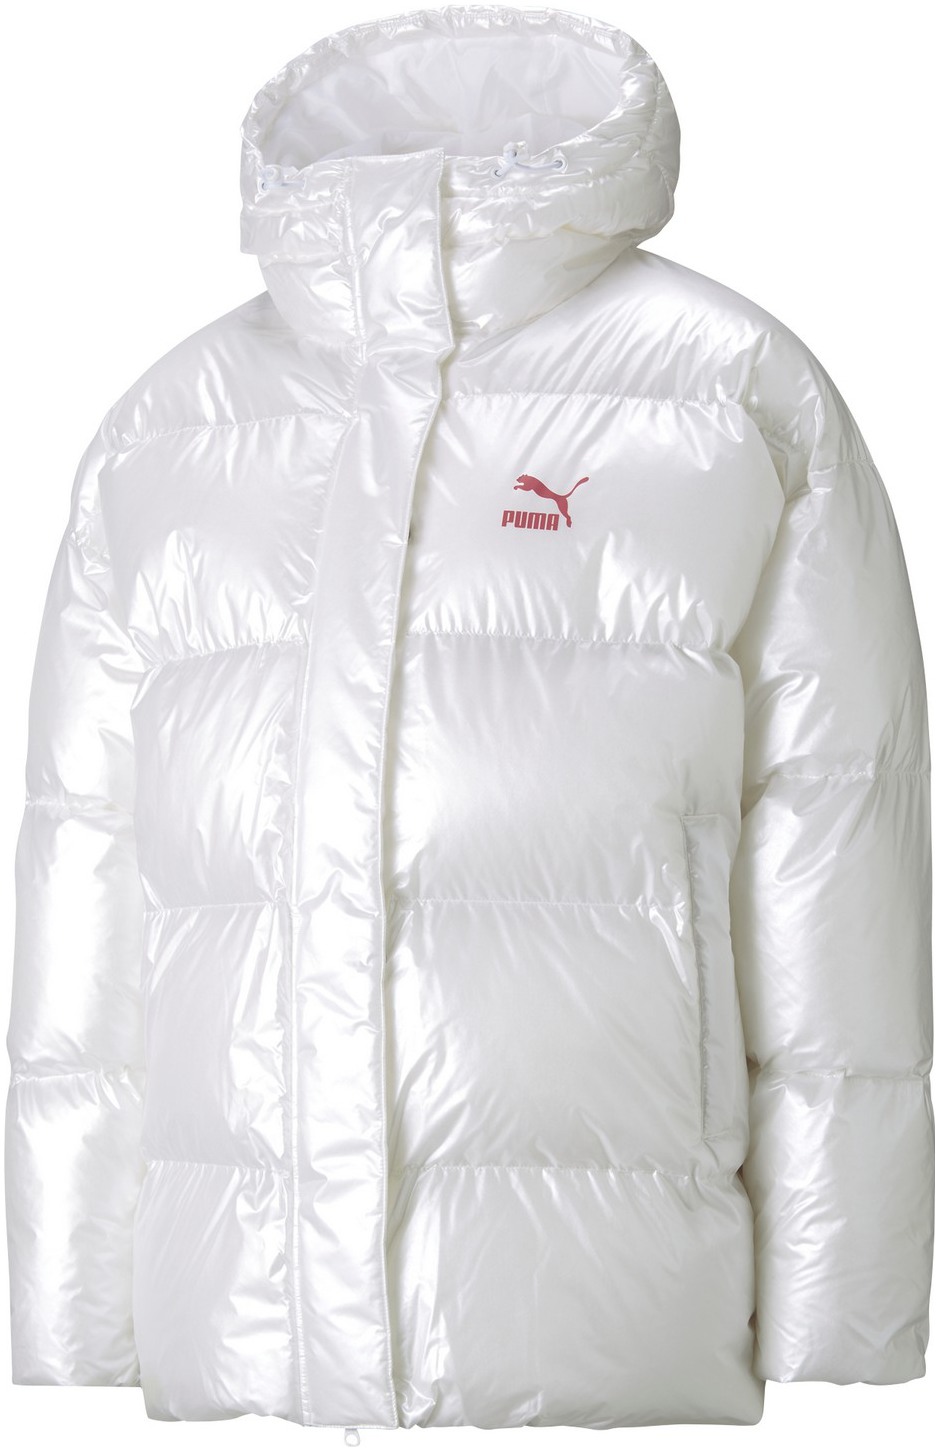 AD white W | Puma JACKET jacket CLASSICS Womens winter OVERSIZED